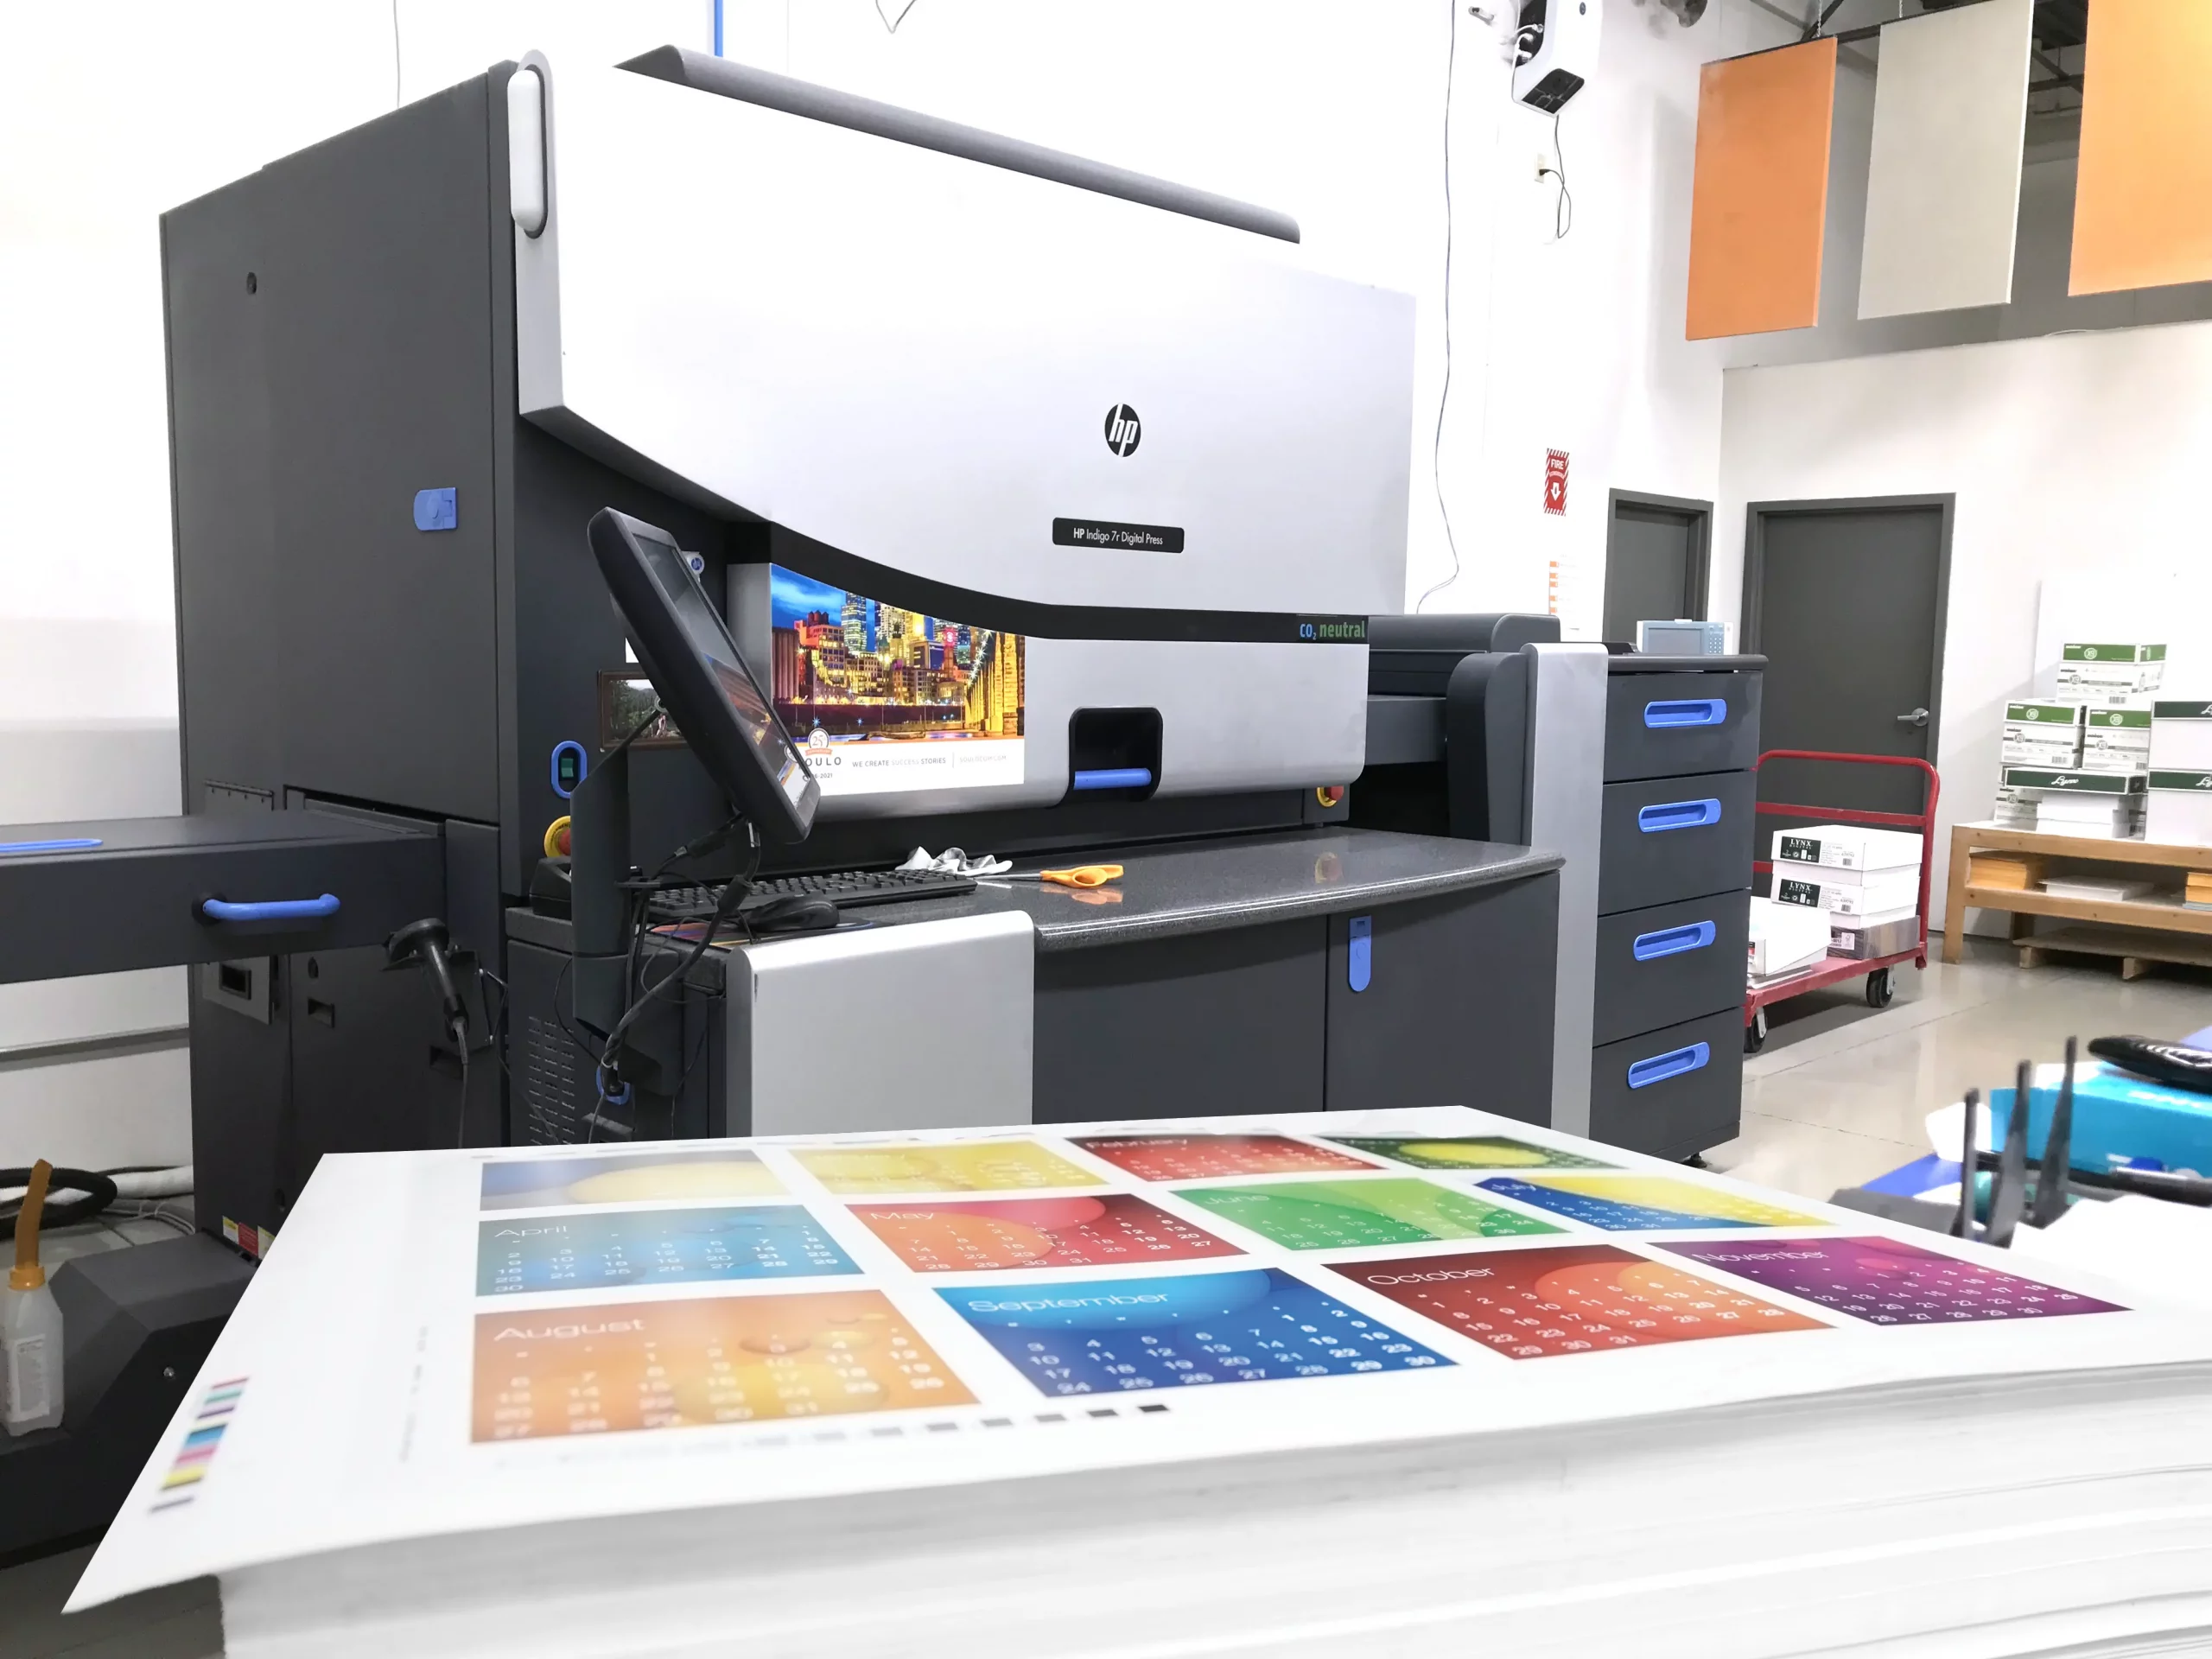 Image of HP printer